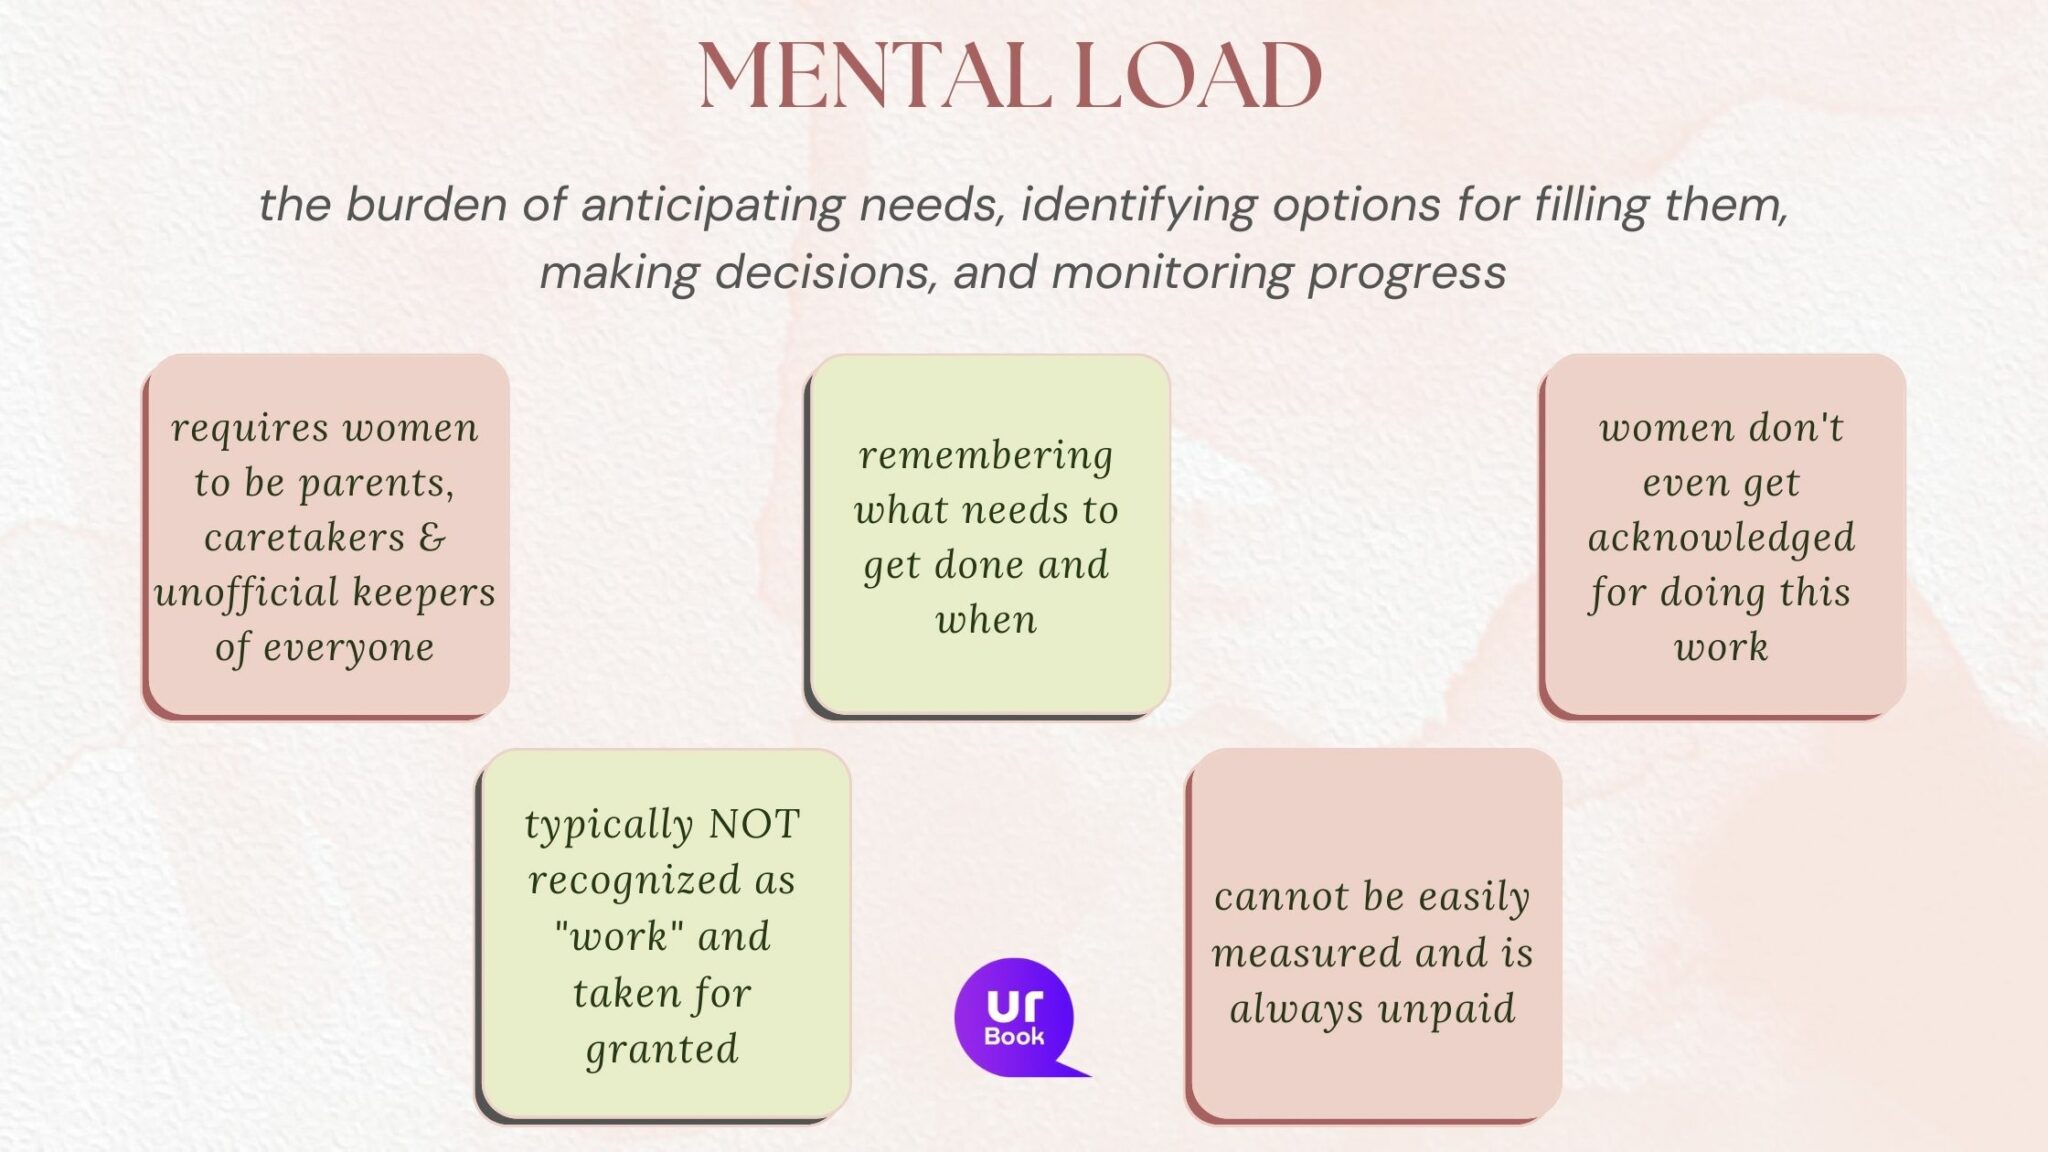 Mental load